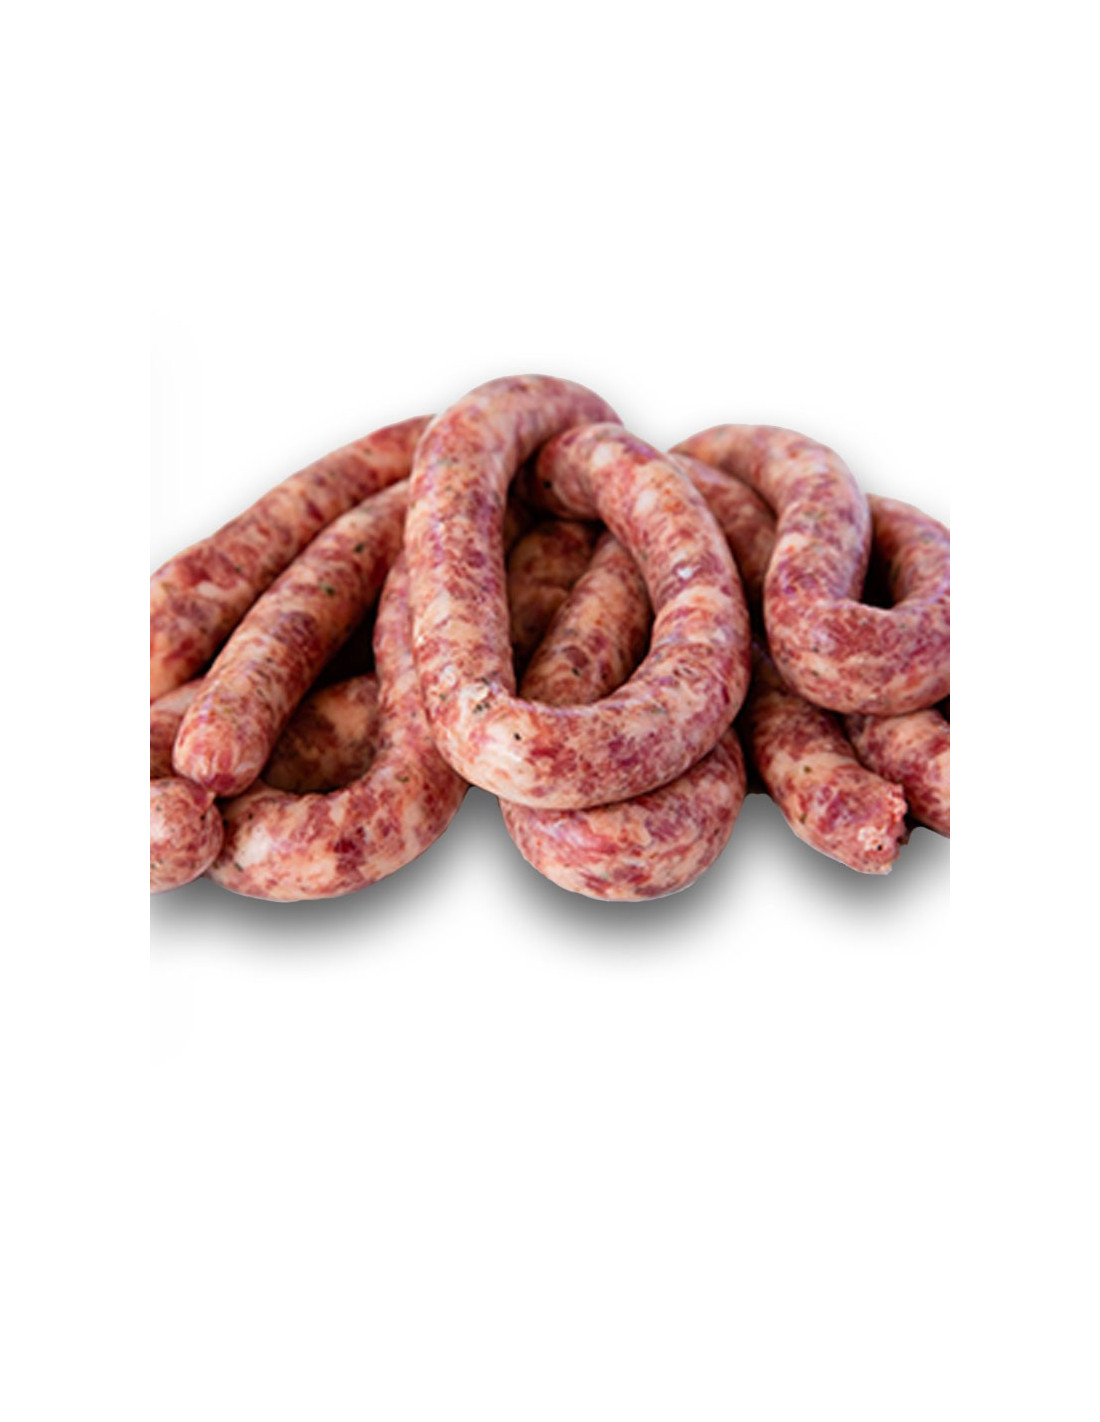 Buy Salchicha Parrillera Sausage, 1.5kg - from